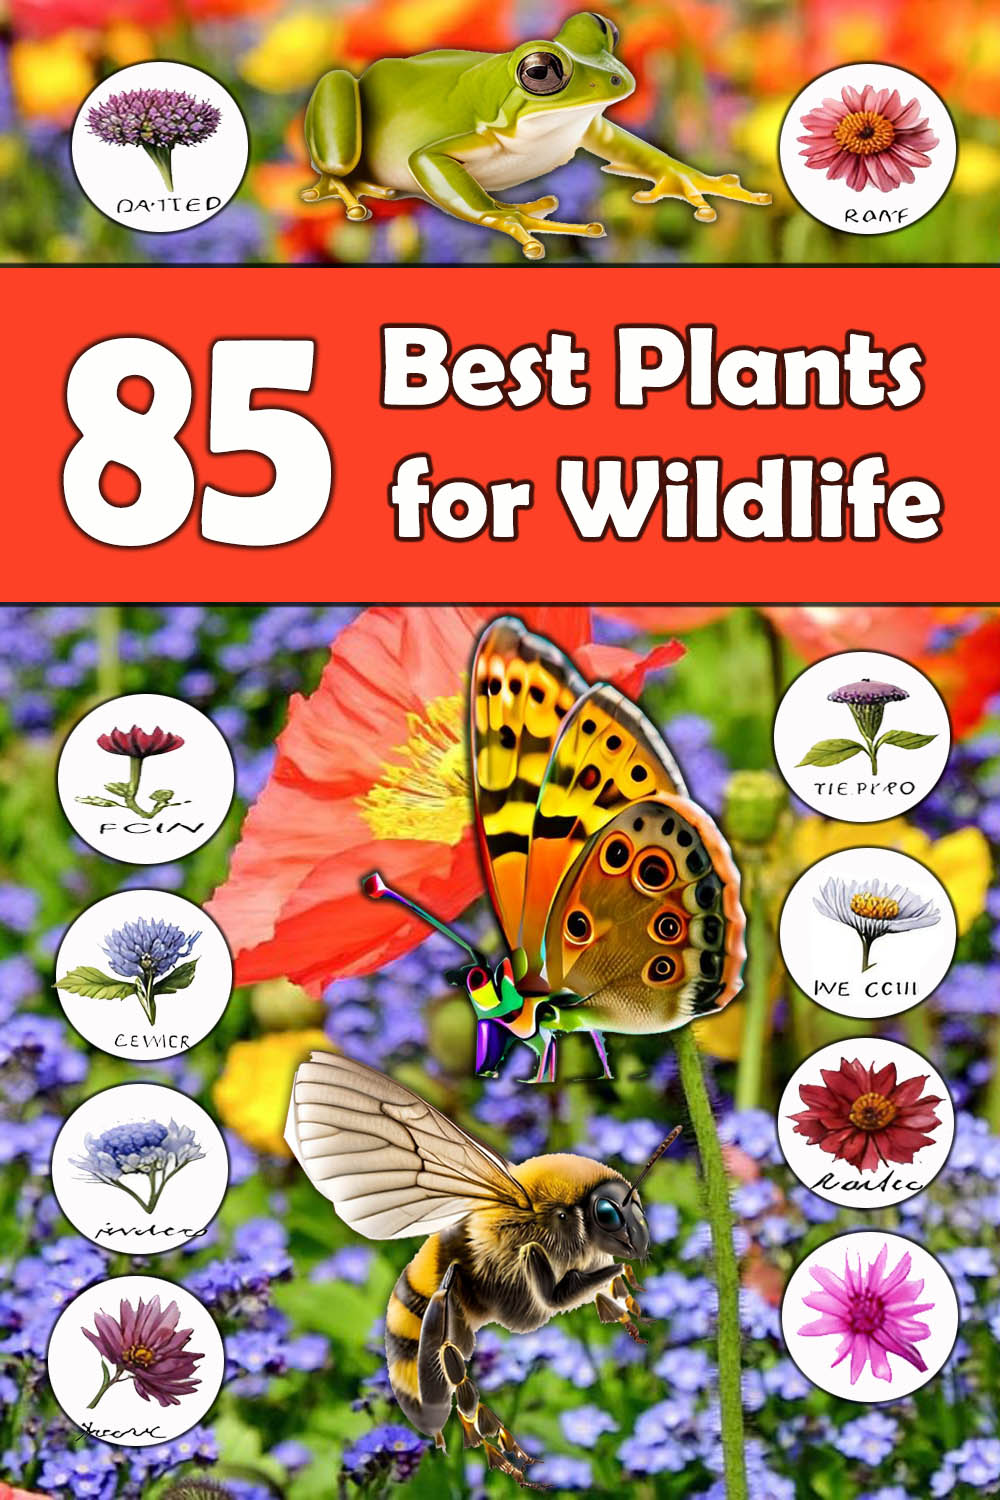 Best plants for wildlife